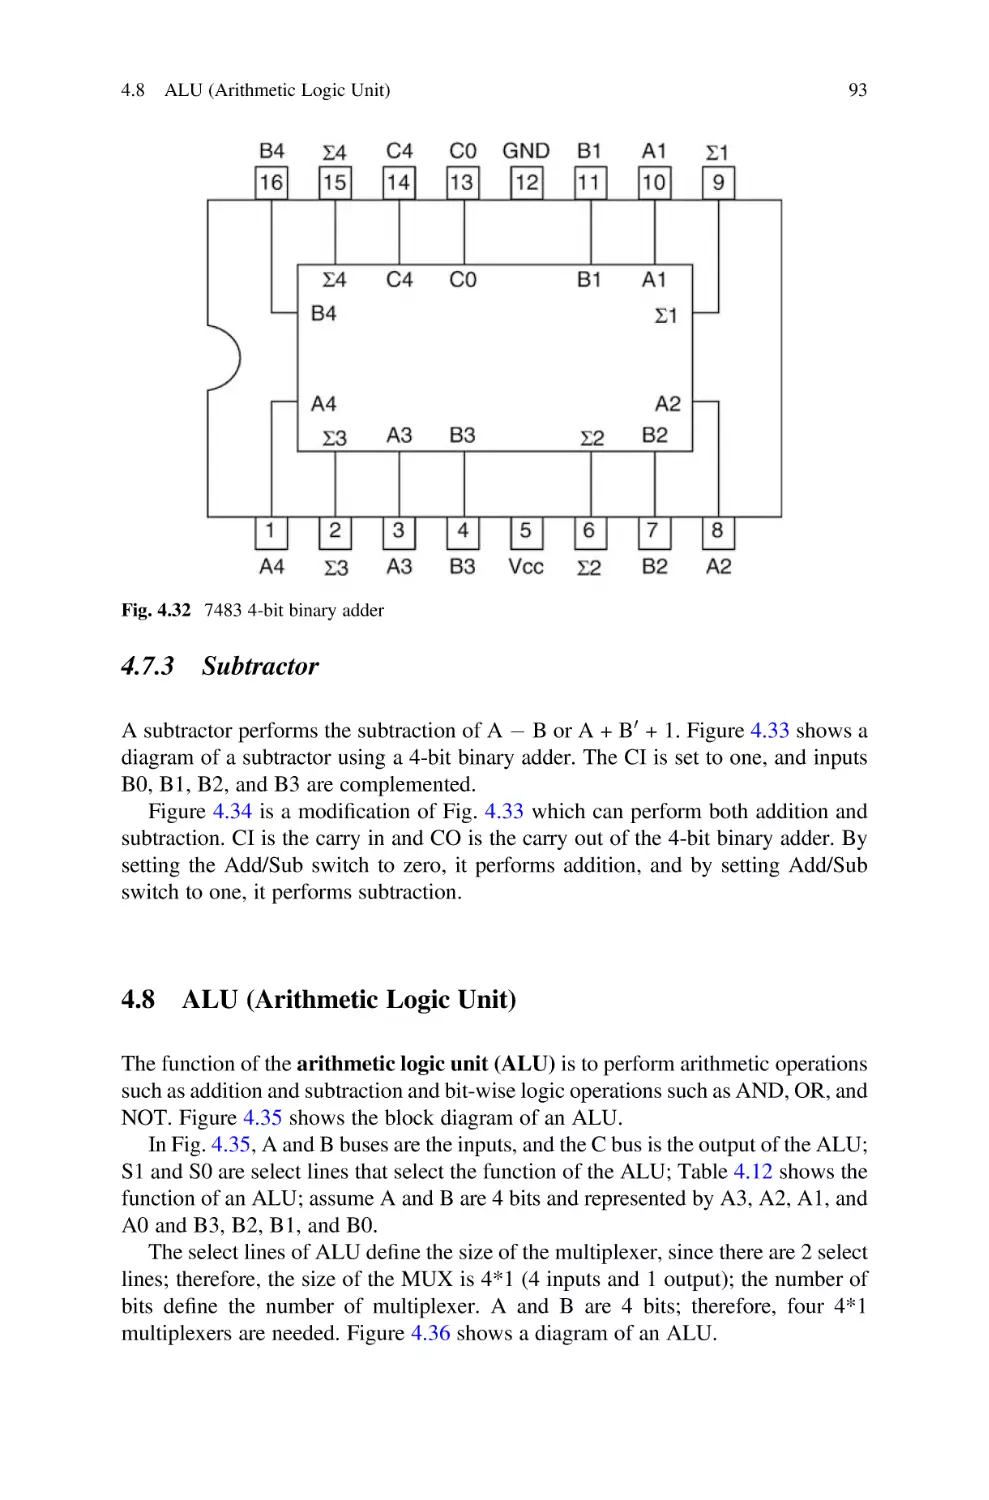 4.7.3 Subtractor
4.8 ALU (Arithmetic Logic Unit)